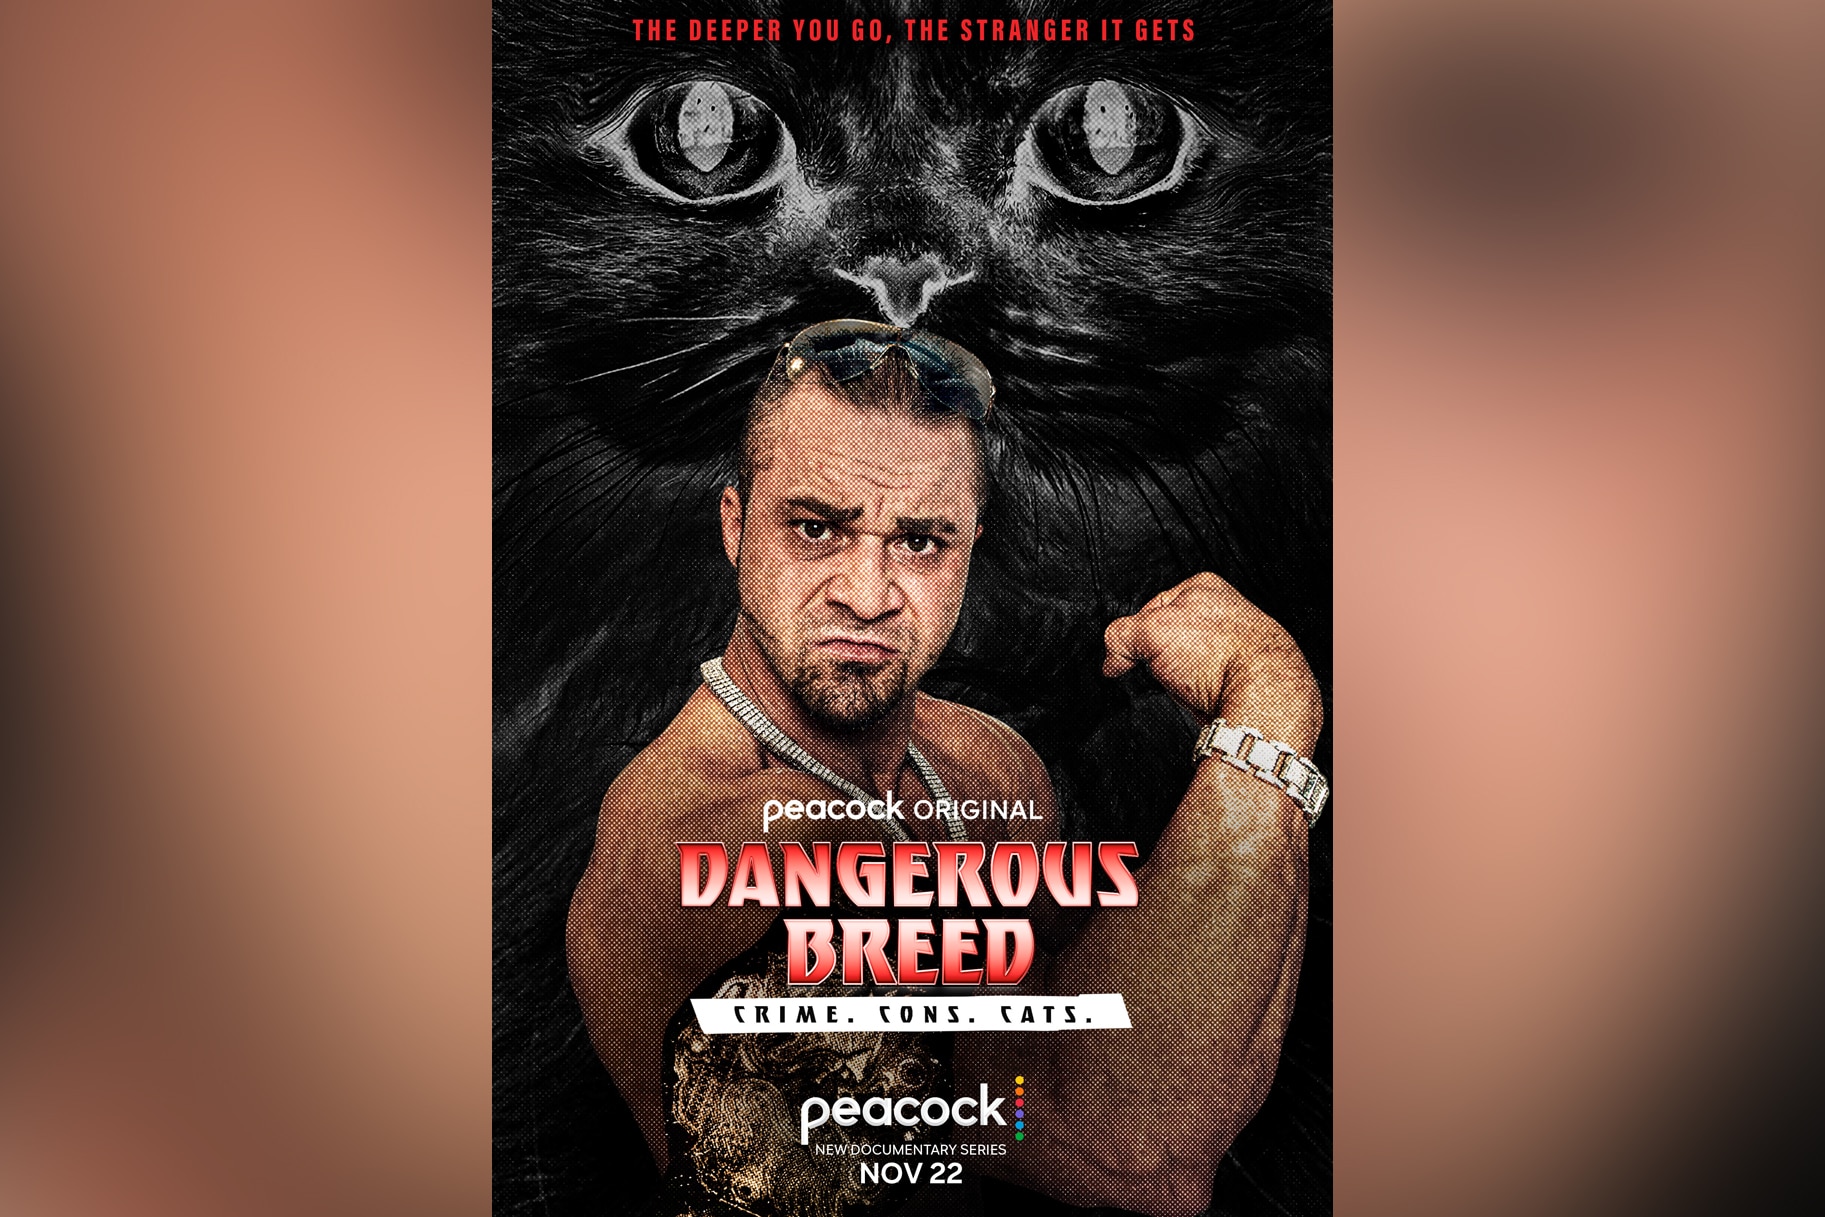 Dangerous Breed: Crime. Cons. Cats. show art